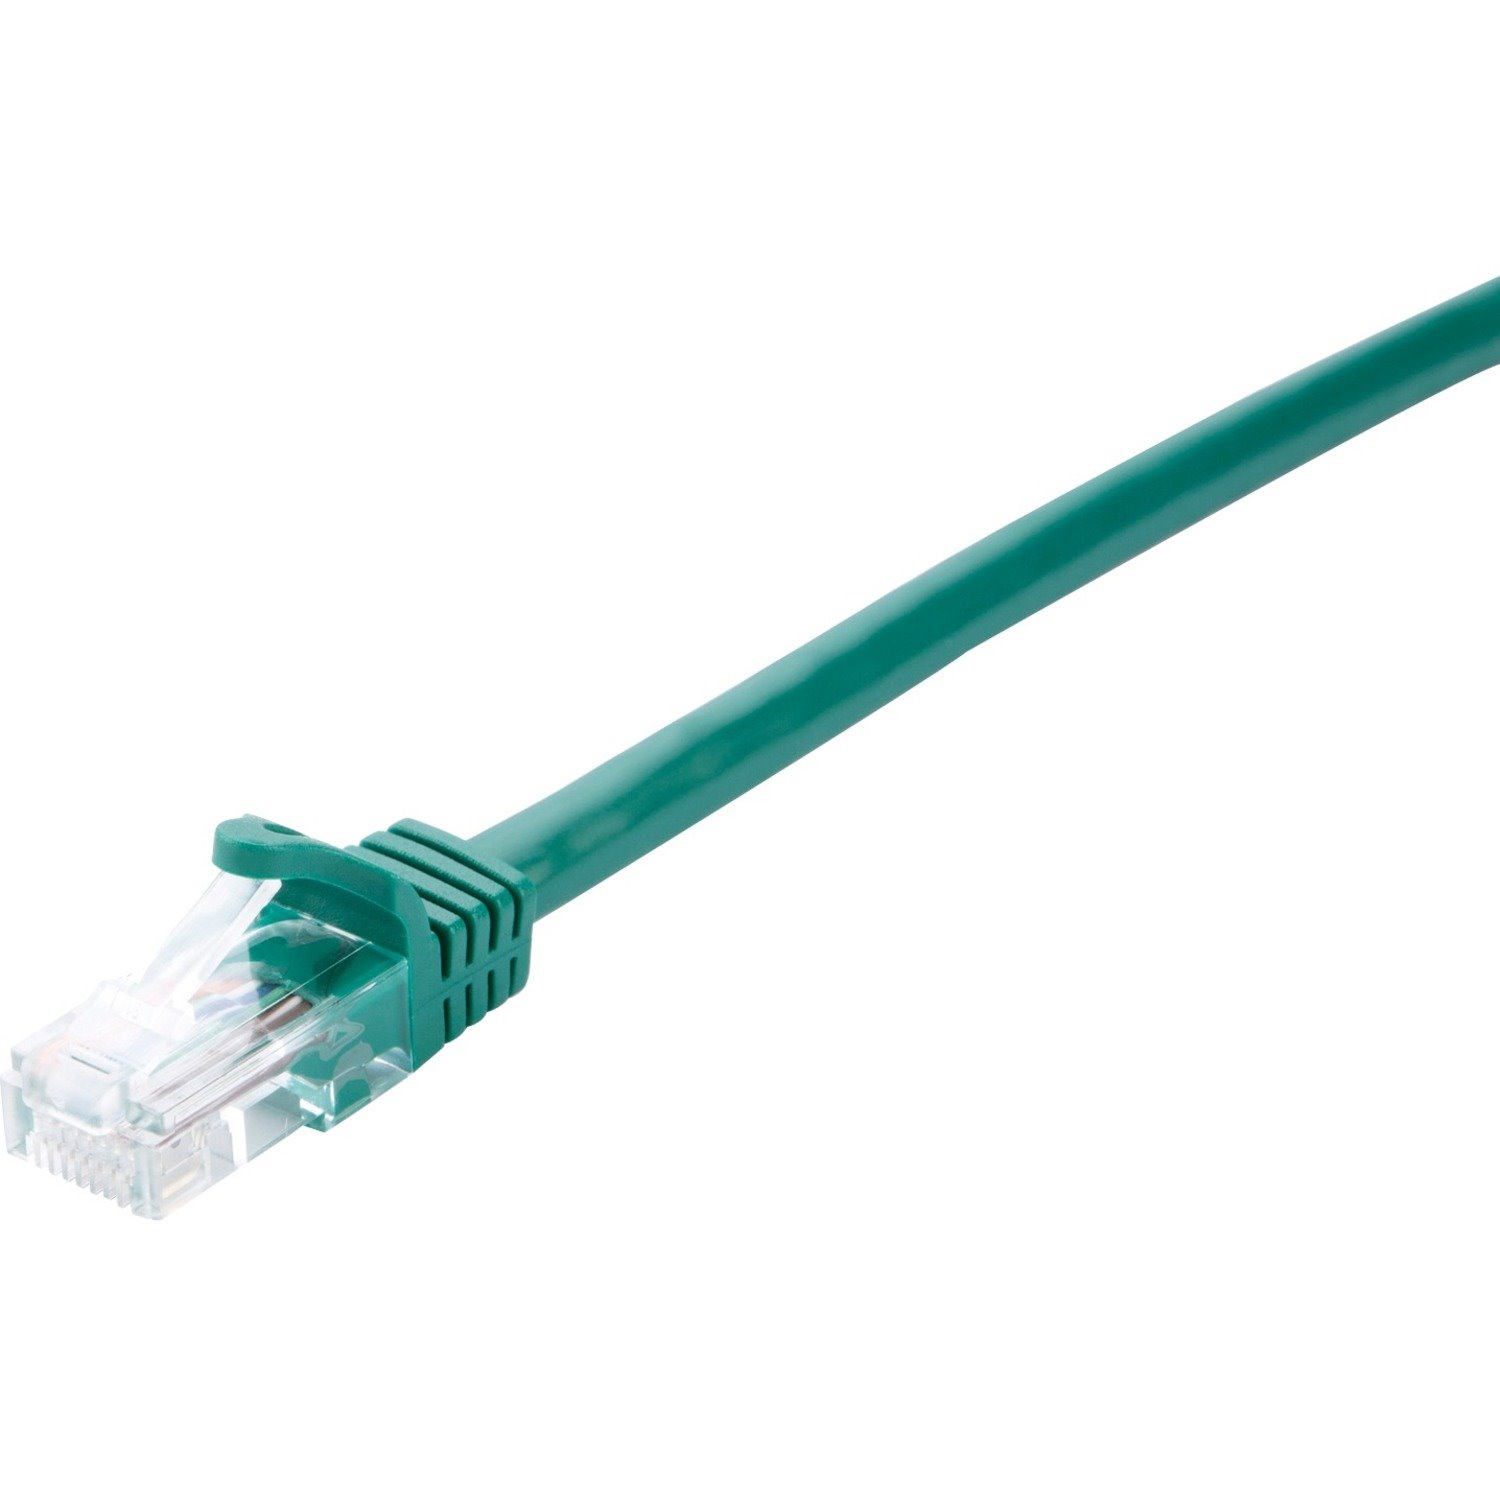 V7 V7CAT6UTP-50C-GRN-1E 50 cm Category 6 Network Cable for Modem, Patch Panel, Network Card